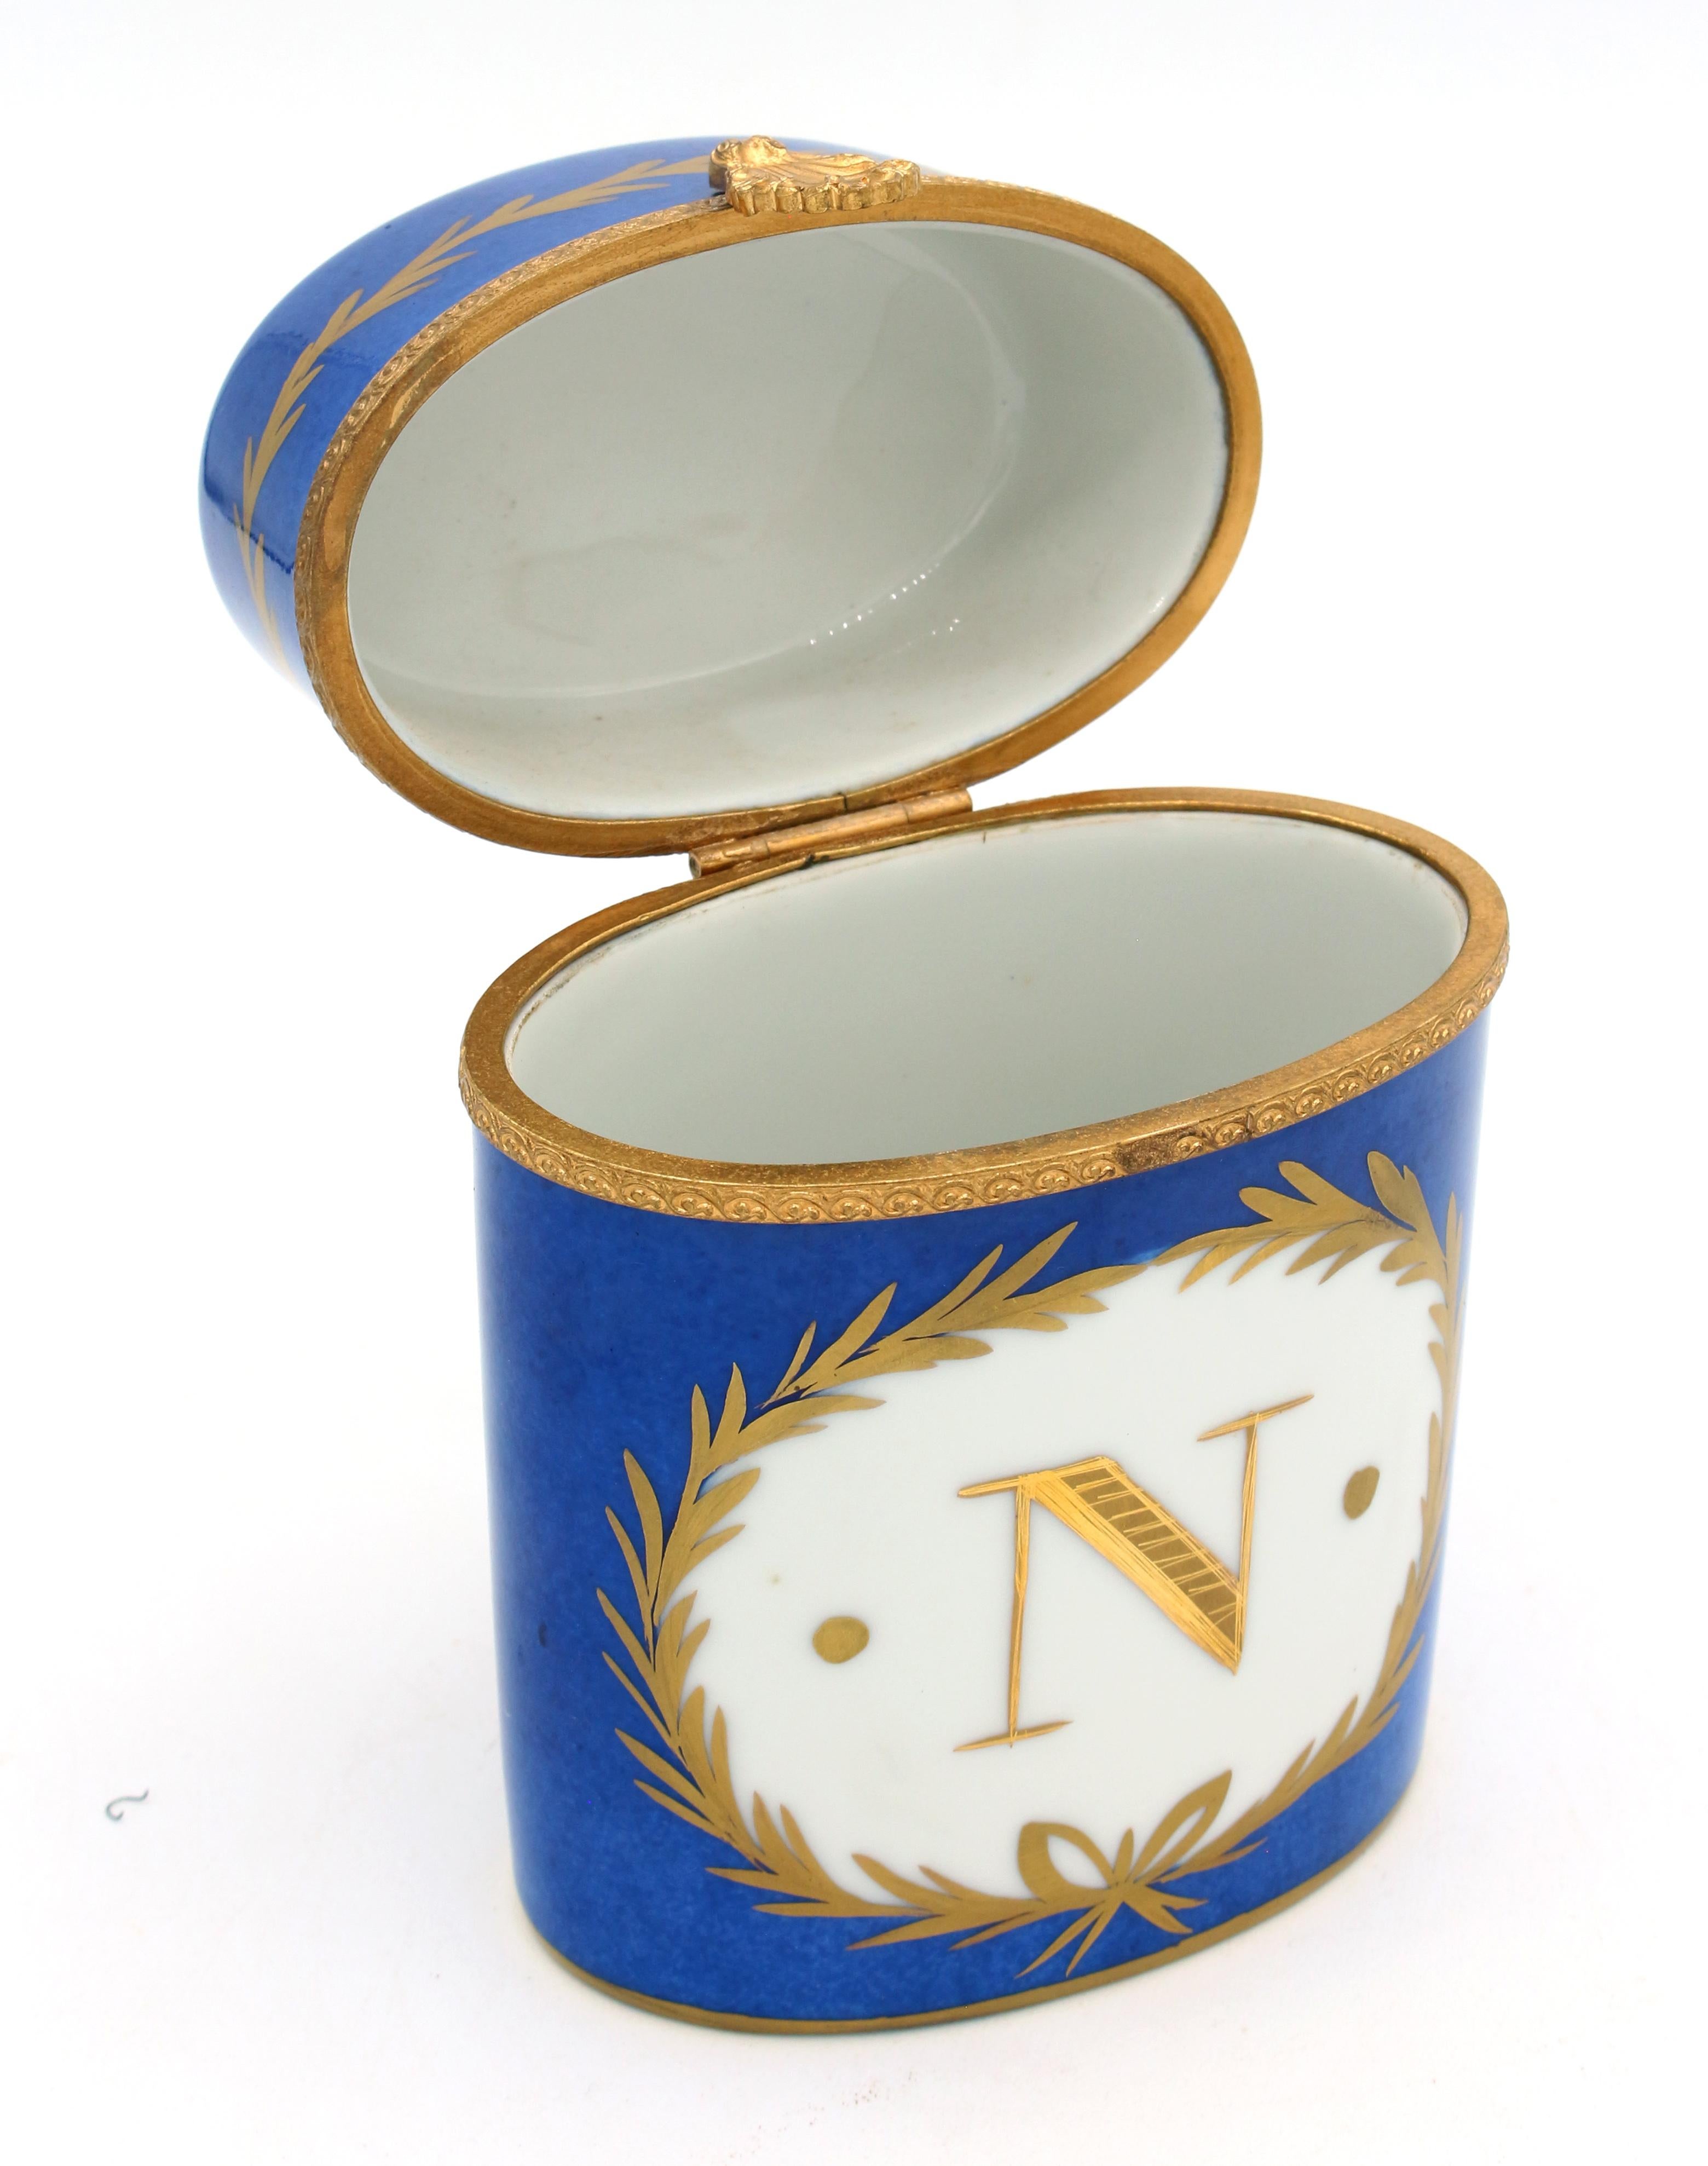 Napoleon III Vintage French Oval Trinket Box by Limoges